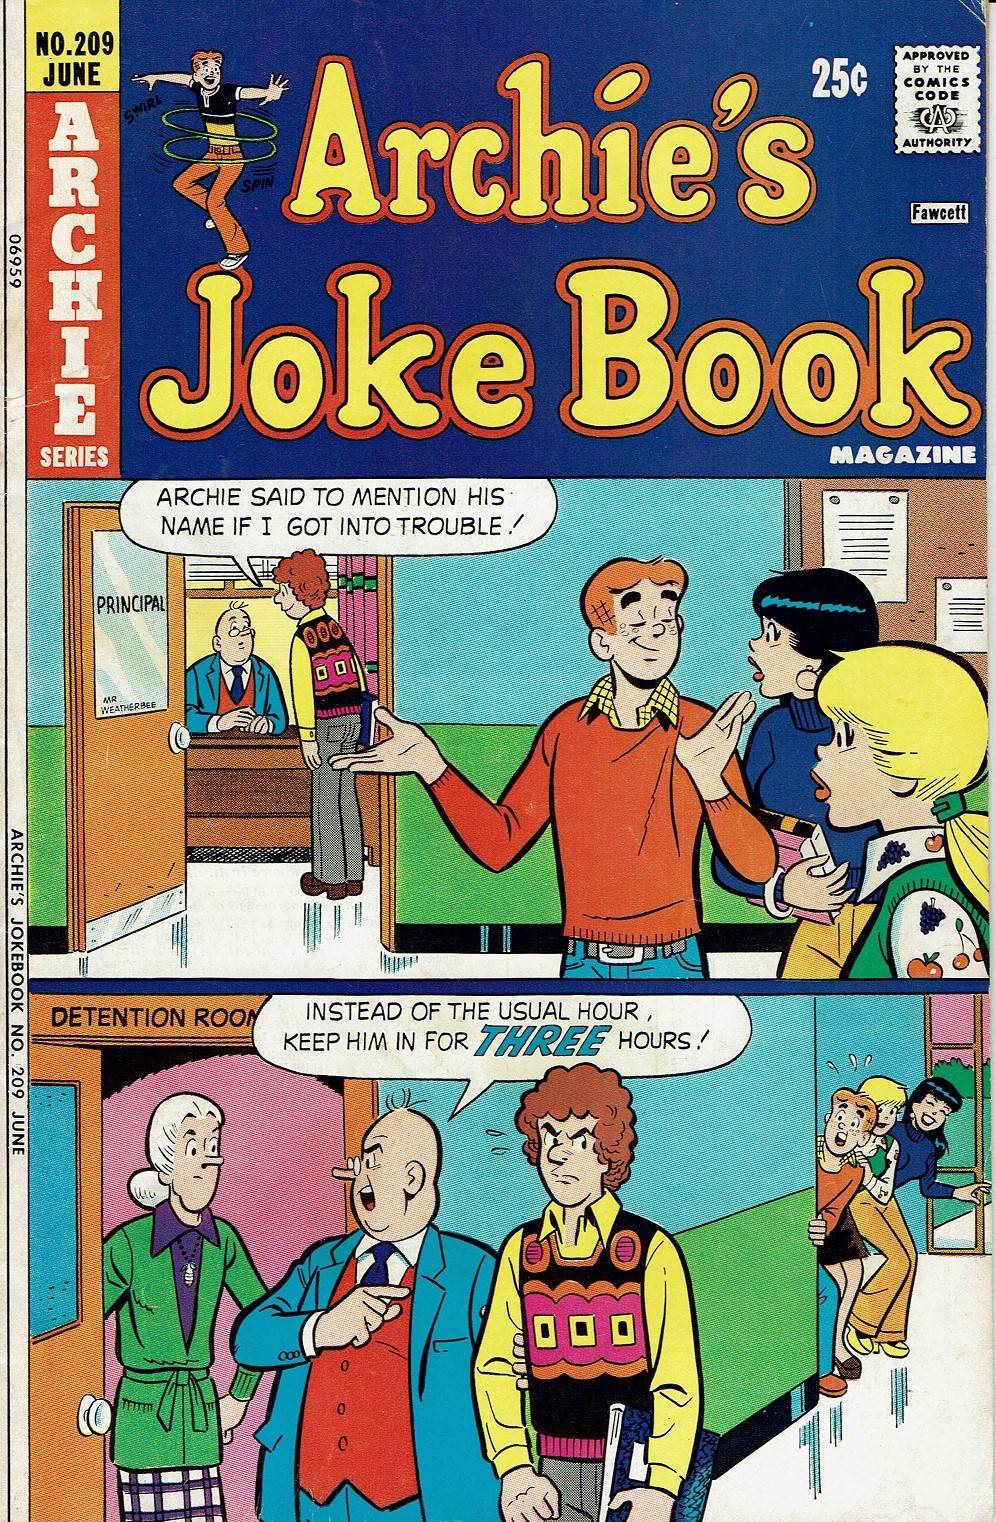 Archie's Joke Book Magazine issue 209 - Page 1